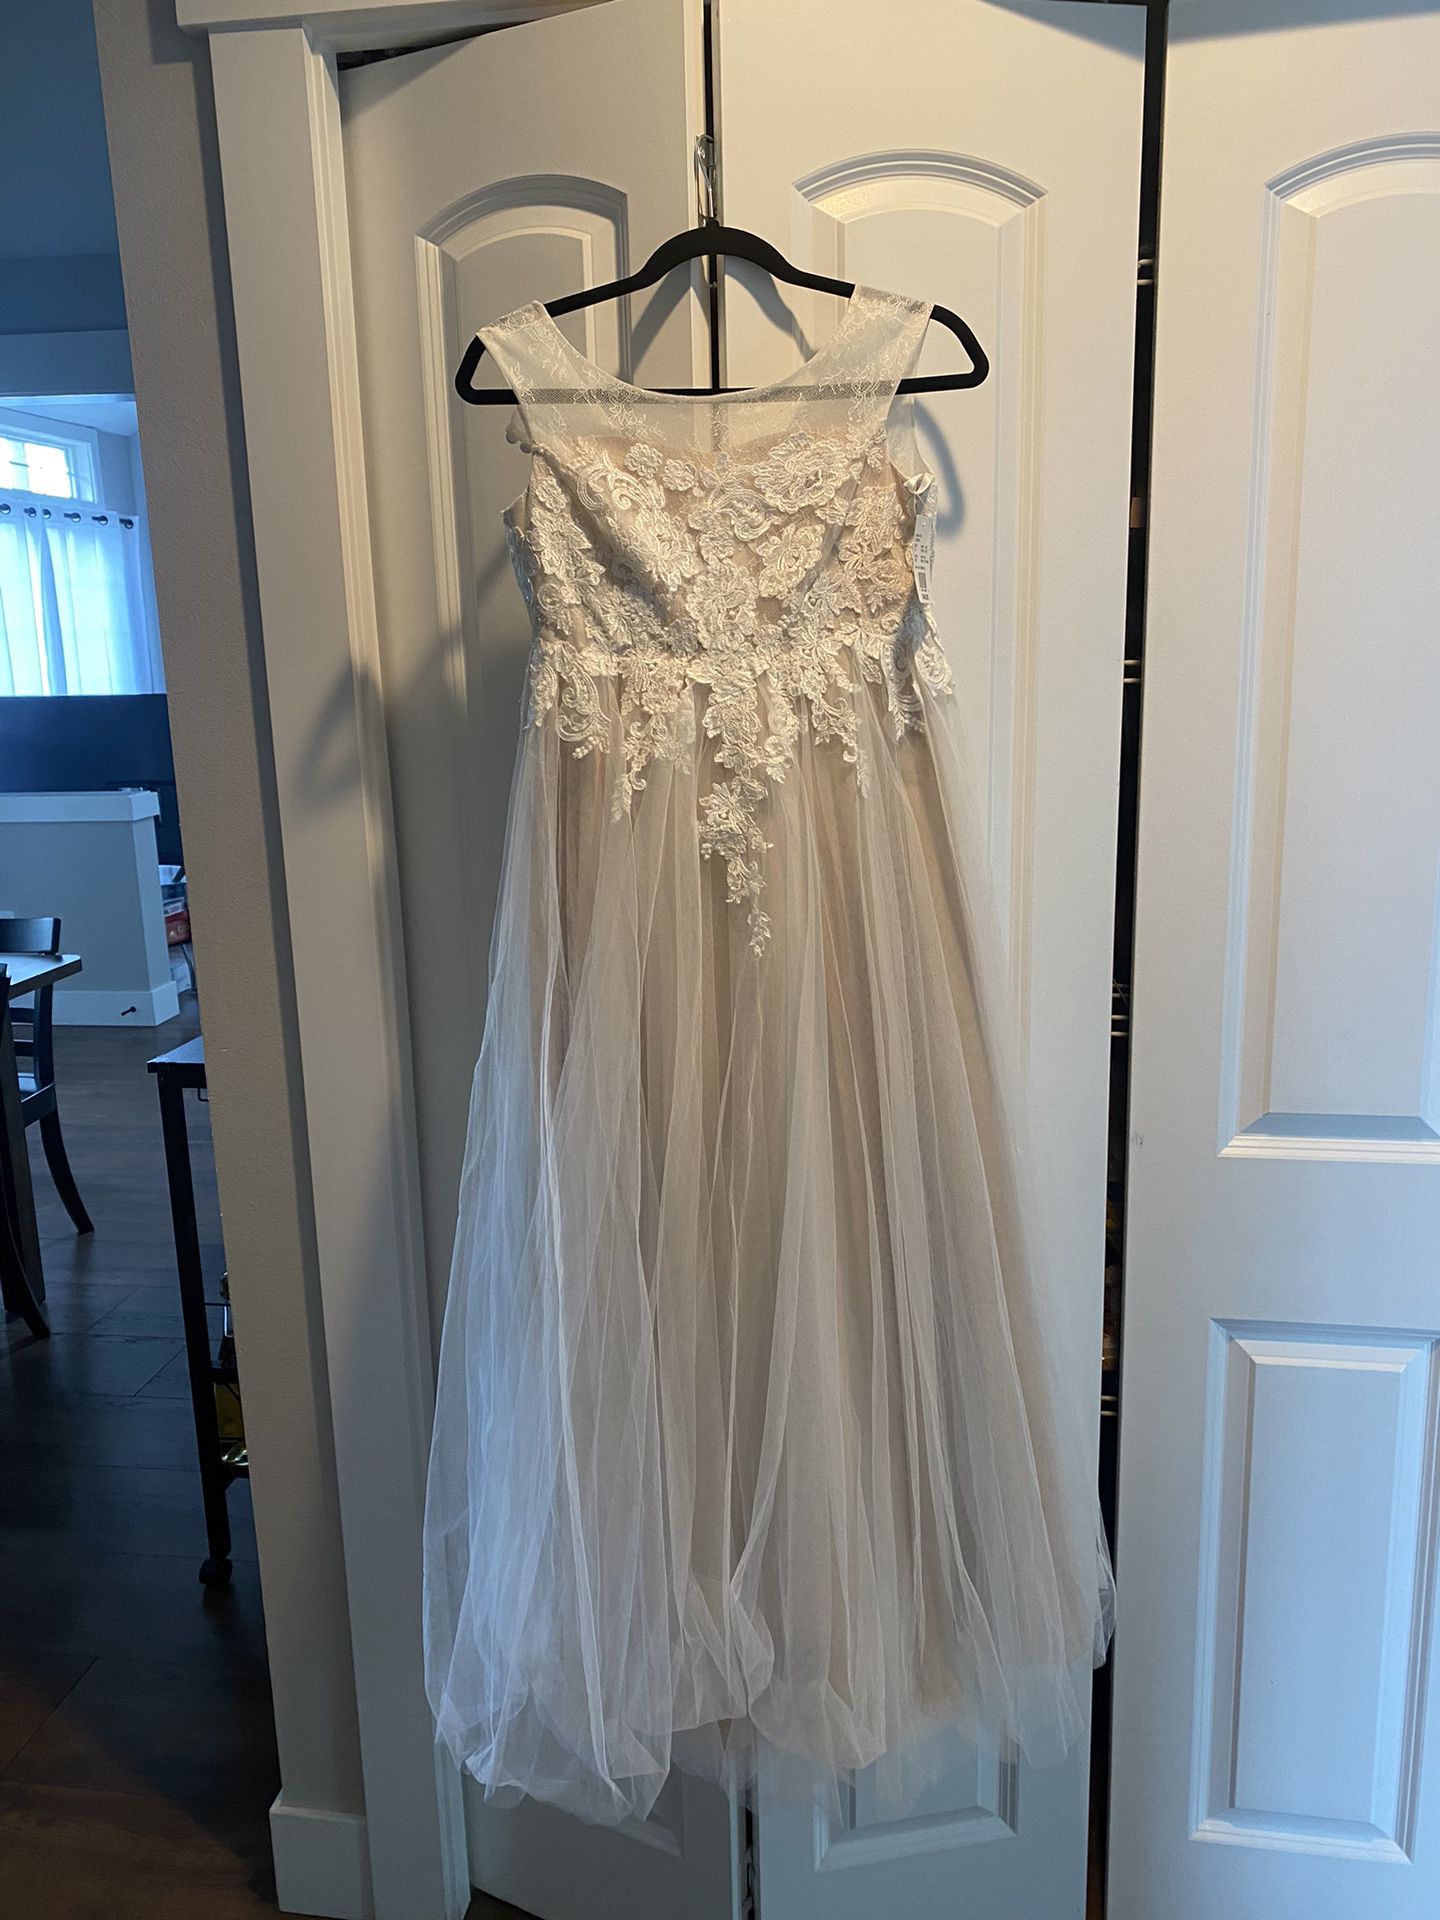 David’s Bridal Girls Dress Size 12